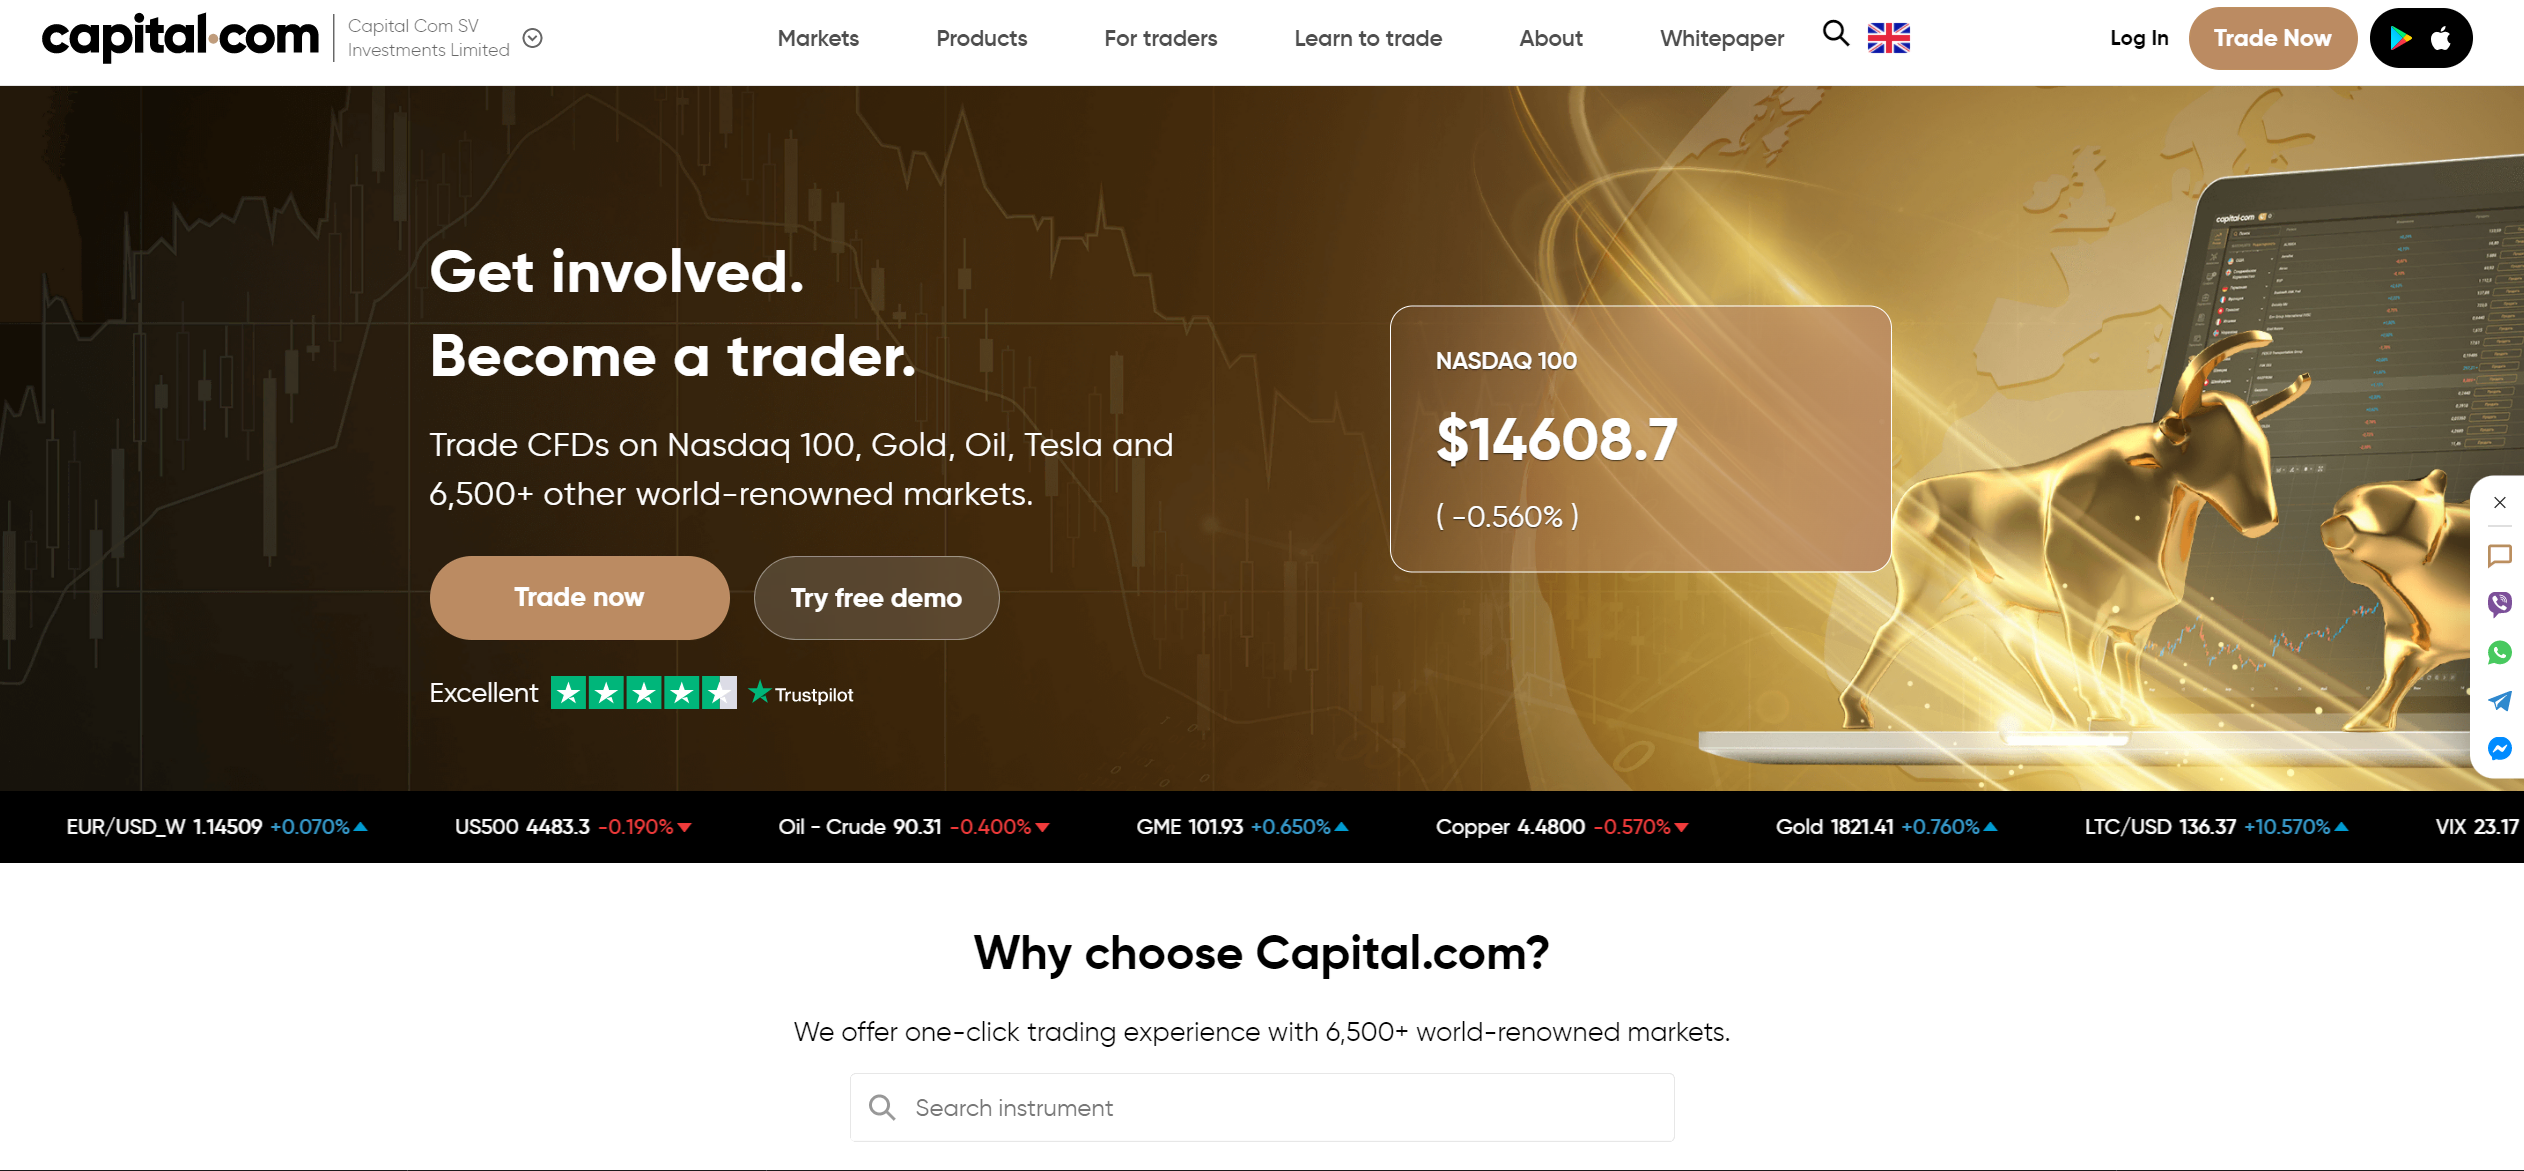 Capital.com officiële website